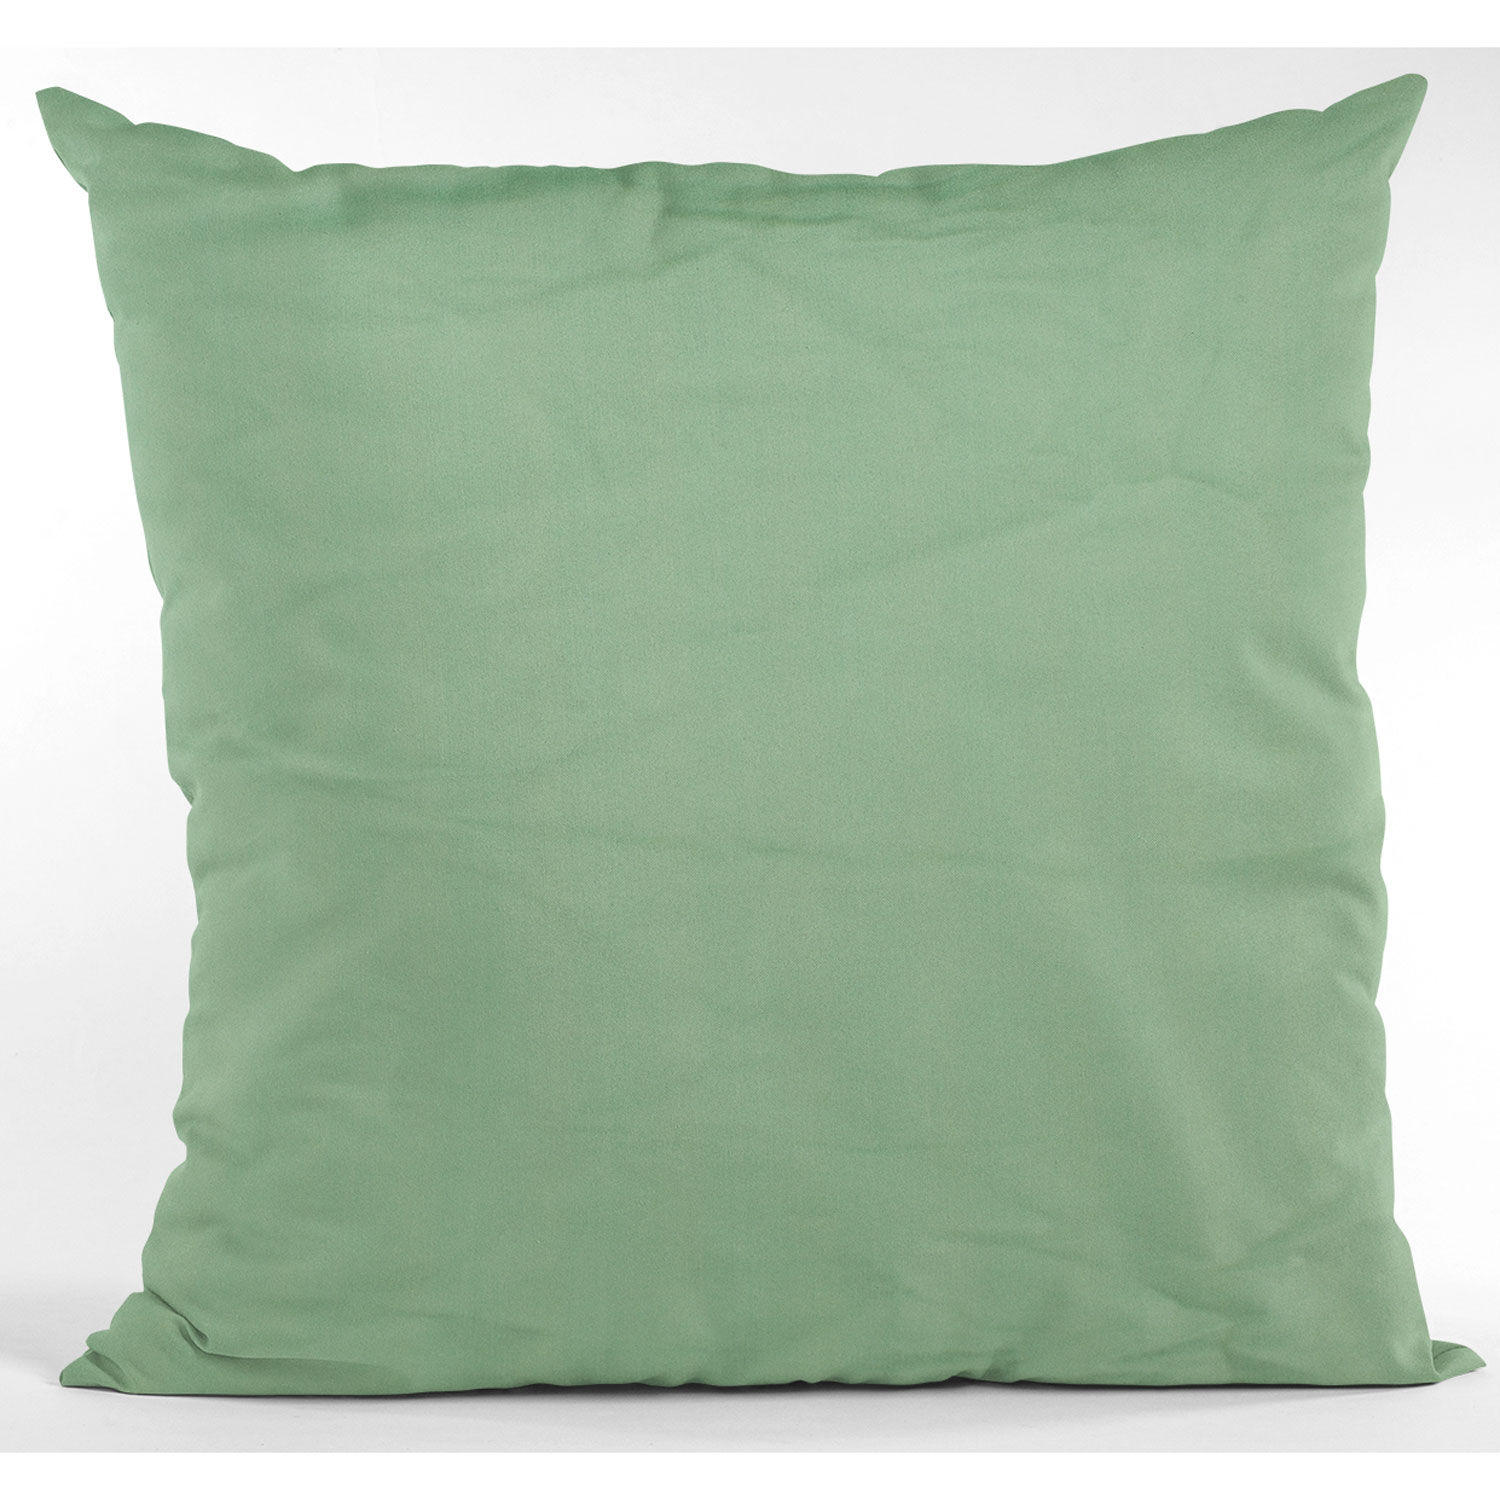 Velvet-feel decorative cushion, 17.5"x17.5" - Olive